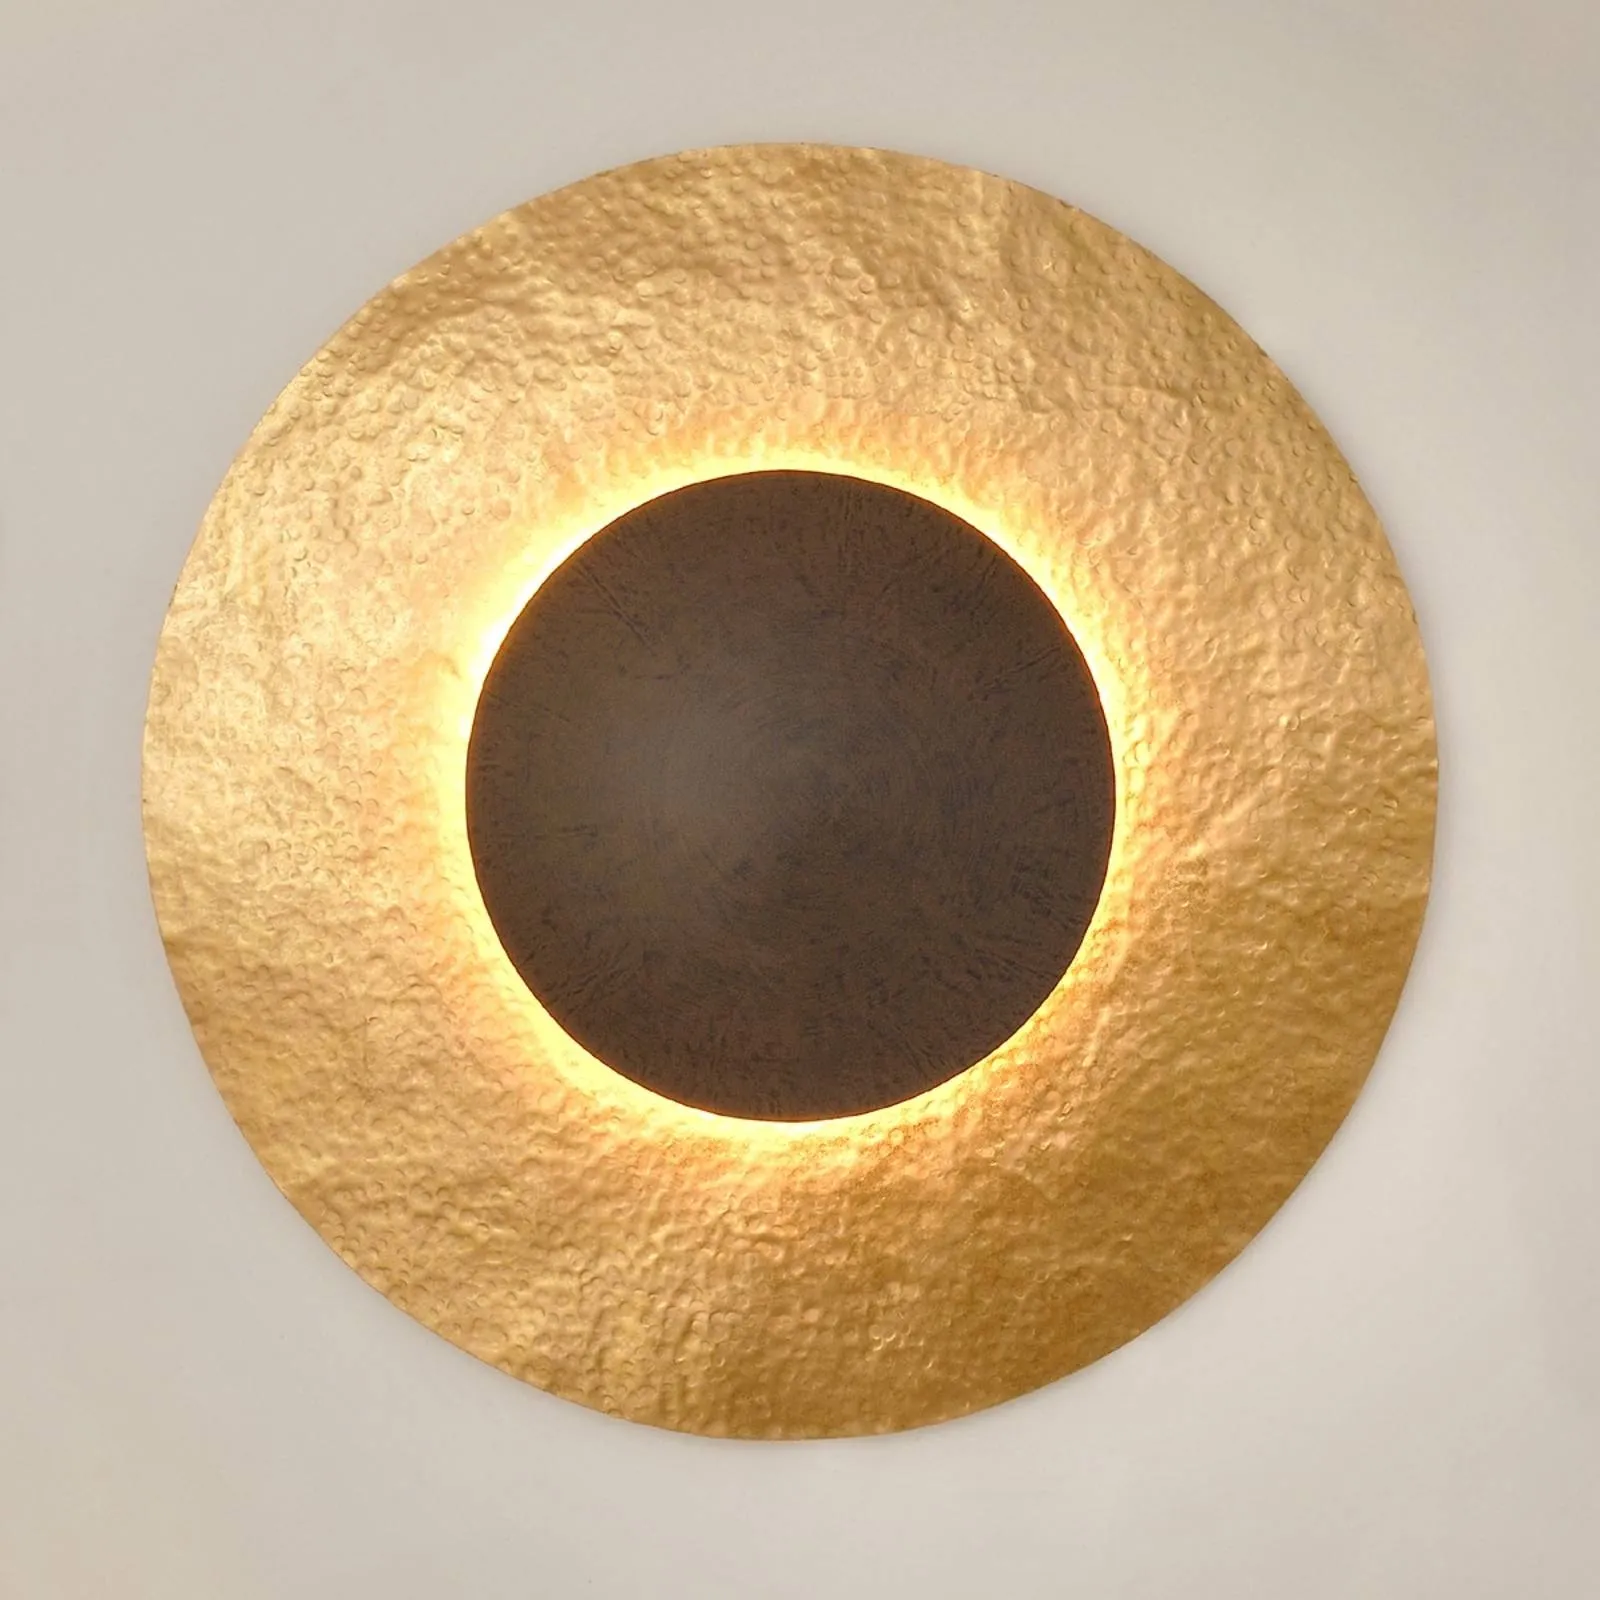 Satellite 2 wall light in gold-brown, Ø 91 cm